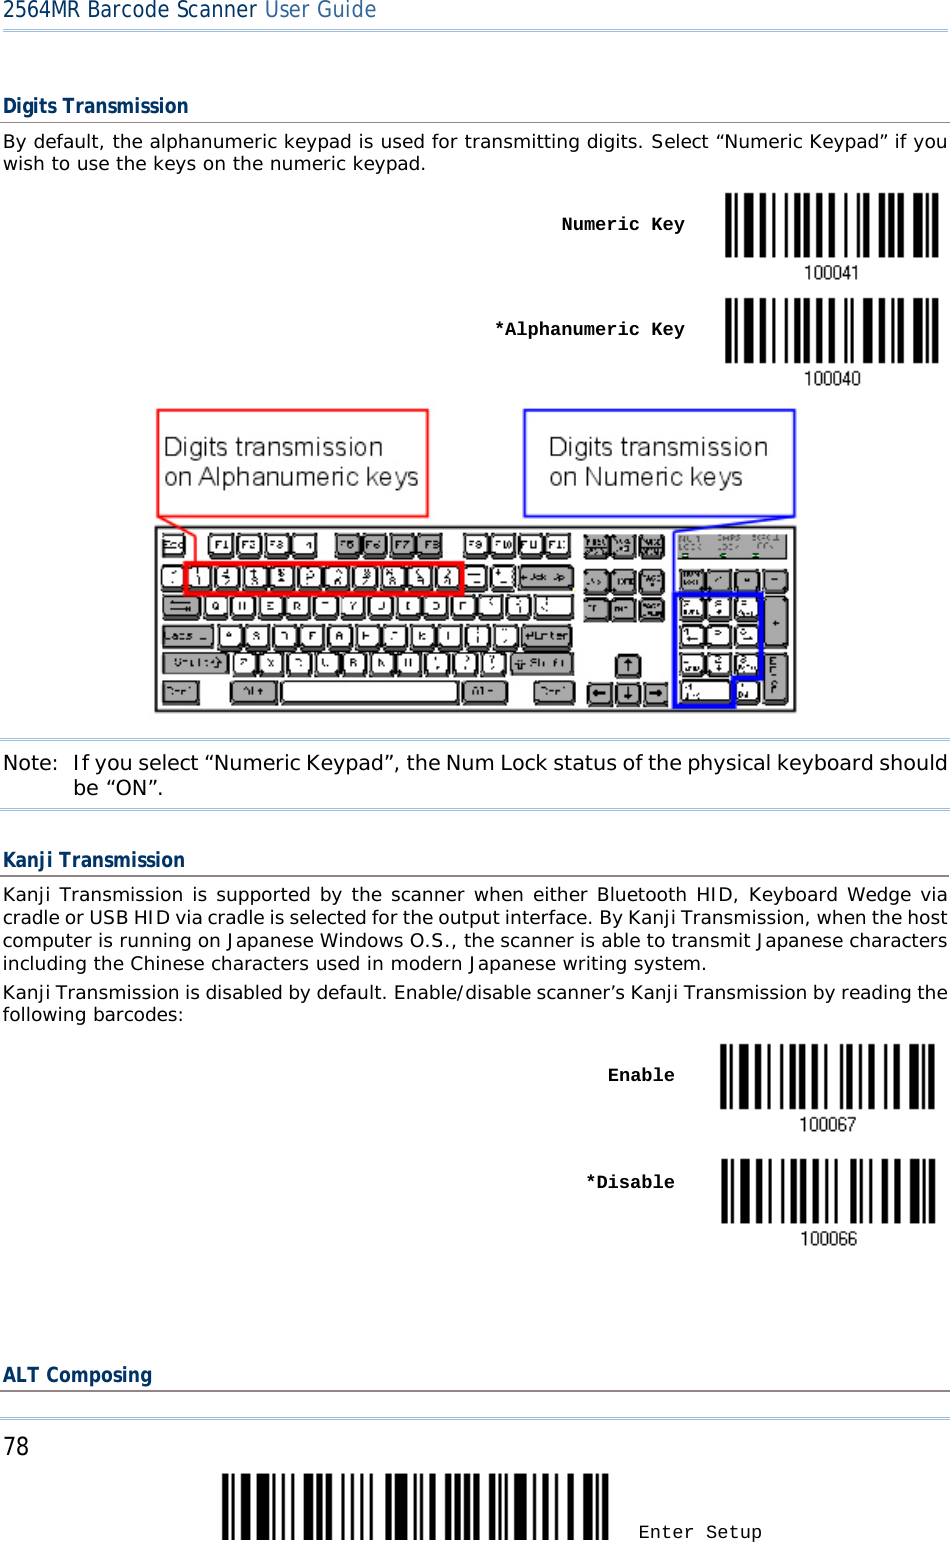 2564MR Barcode Scanner User Guide  Digits Transmission By default, the alphanumeric keypad is used for transmitting digits. Select “Numeric Keypad” if you wish to use the keys on the numeric keypad.    Numeric Key     *Alphanumeric Key                   Note: If you select “Numeric Keypad”, the Num Lock status of the physical keyboard should be “ON”.  Kanji Transmission Kanji Transmission is supported by the scanner when either Bluetooth HID, Keyboard Wedge via cradle or USB HID via cradle is selected for the output interface. By Kanji Transmission, when the host computer is running on Japanese Windows O.S., the scanner is able to transmit Japanese characters including the Chinese characters used in modern Japanese writing system. Kanji Transmission is disabled by default. Enable/disable scanner’s Kanji Transmission by reading the following barcodes:    Enable     *Disable    ALT Composing 78 Enter Setup 